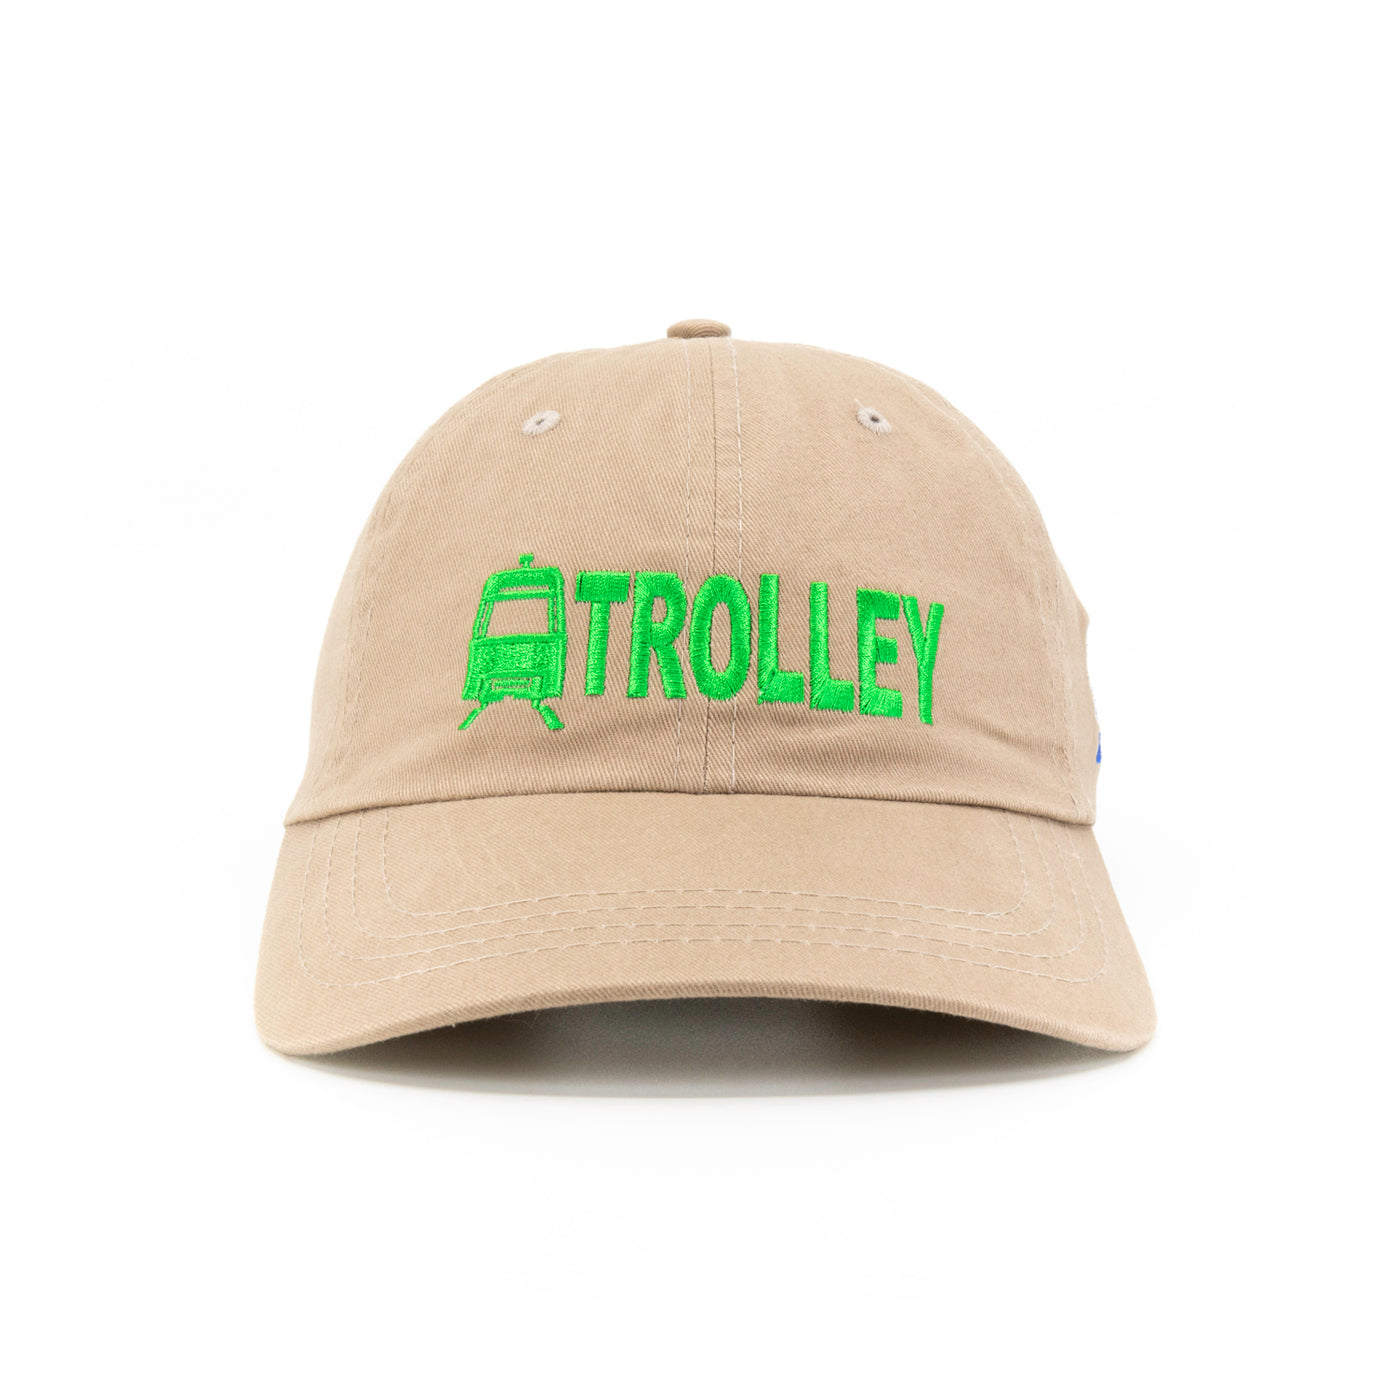 SEPTA Trolley Hat